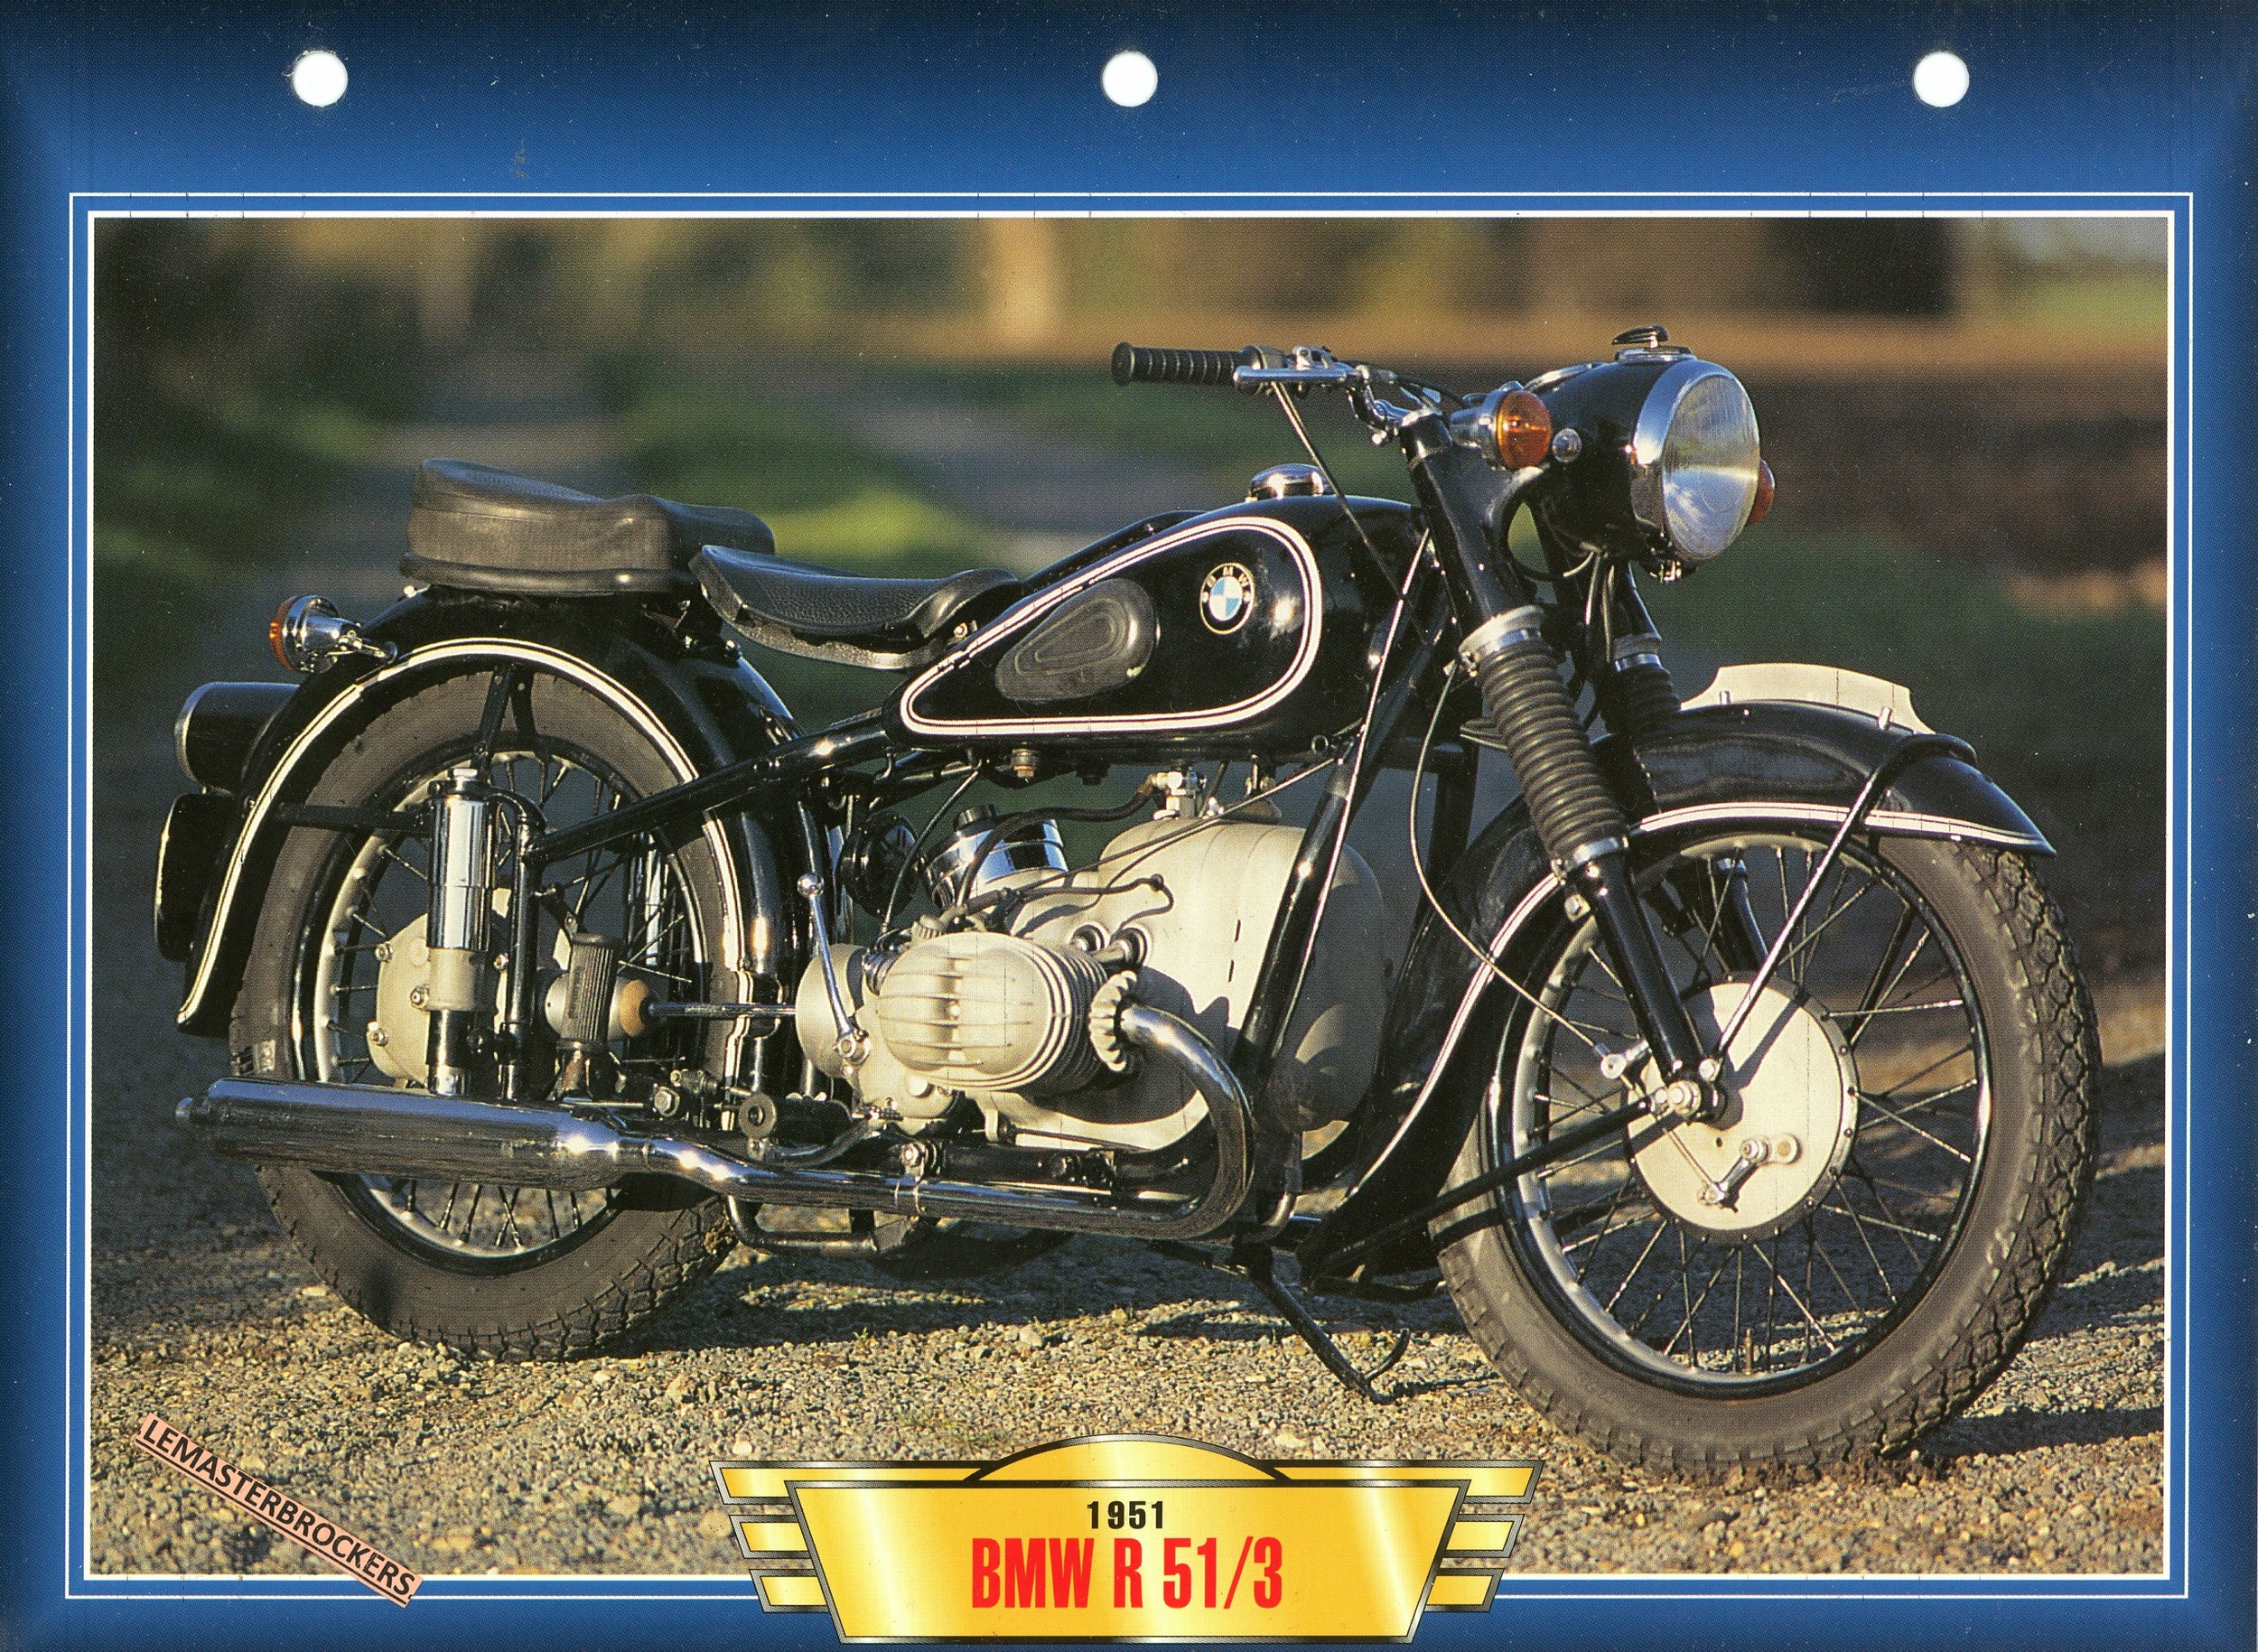 FICHE-MOTO-BMW-R51/3-1951-LEMASTERBROCKERS-CARS-MOTORCYCLES-ATLAS